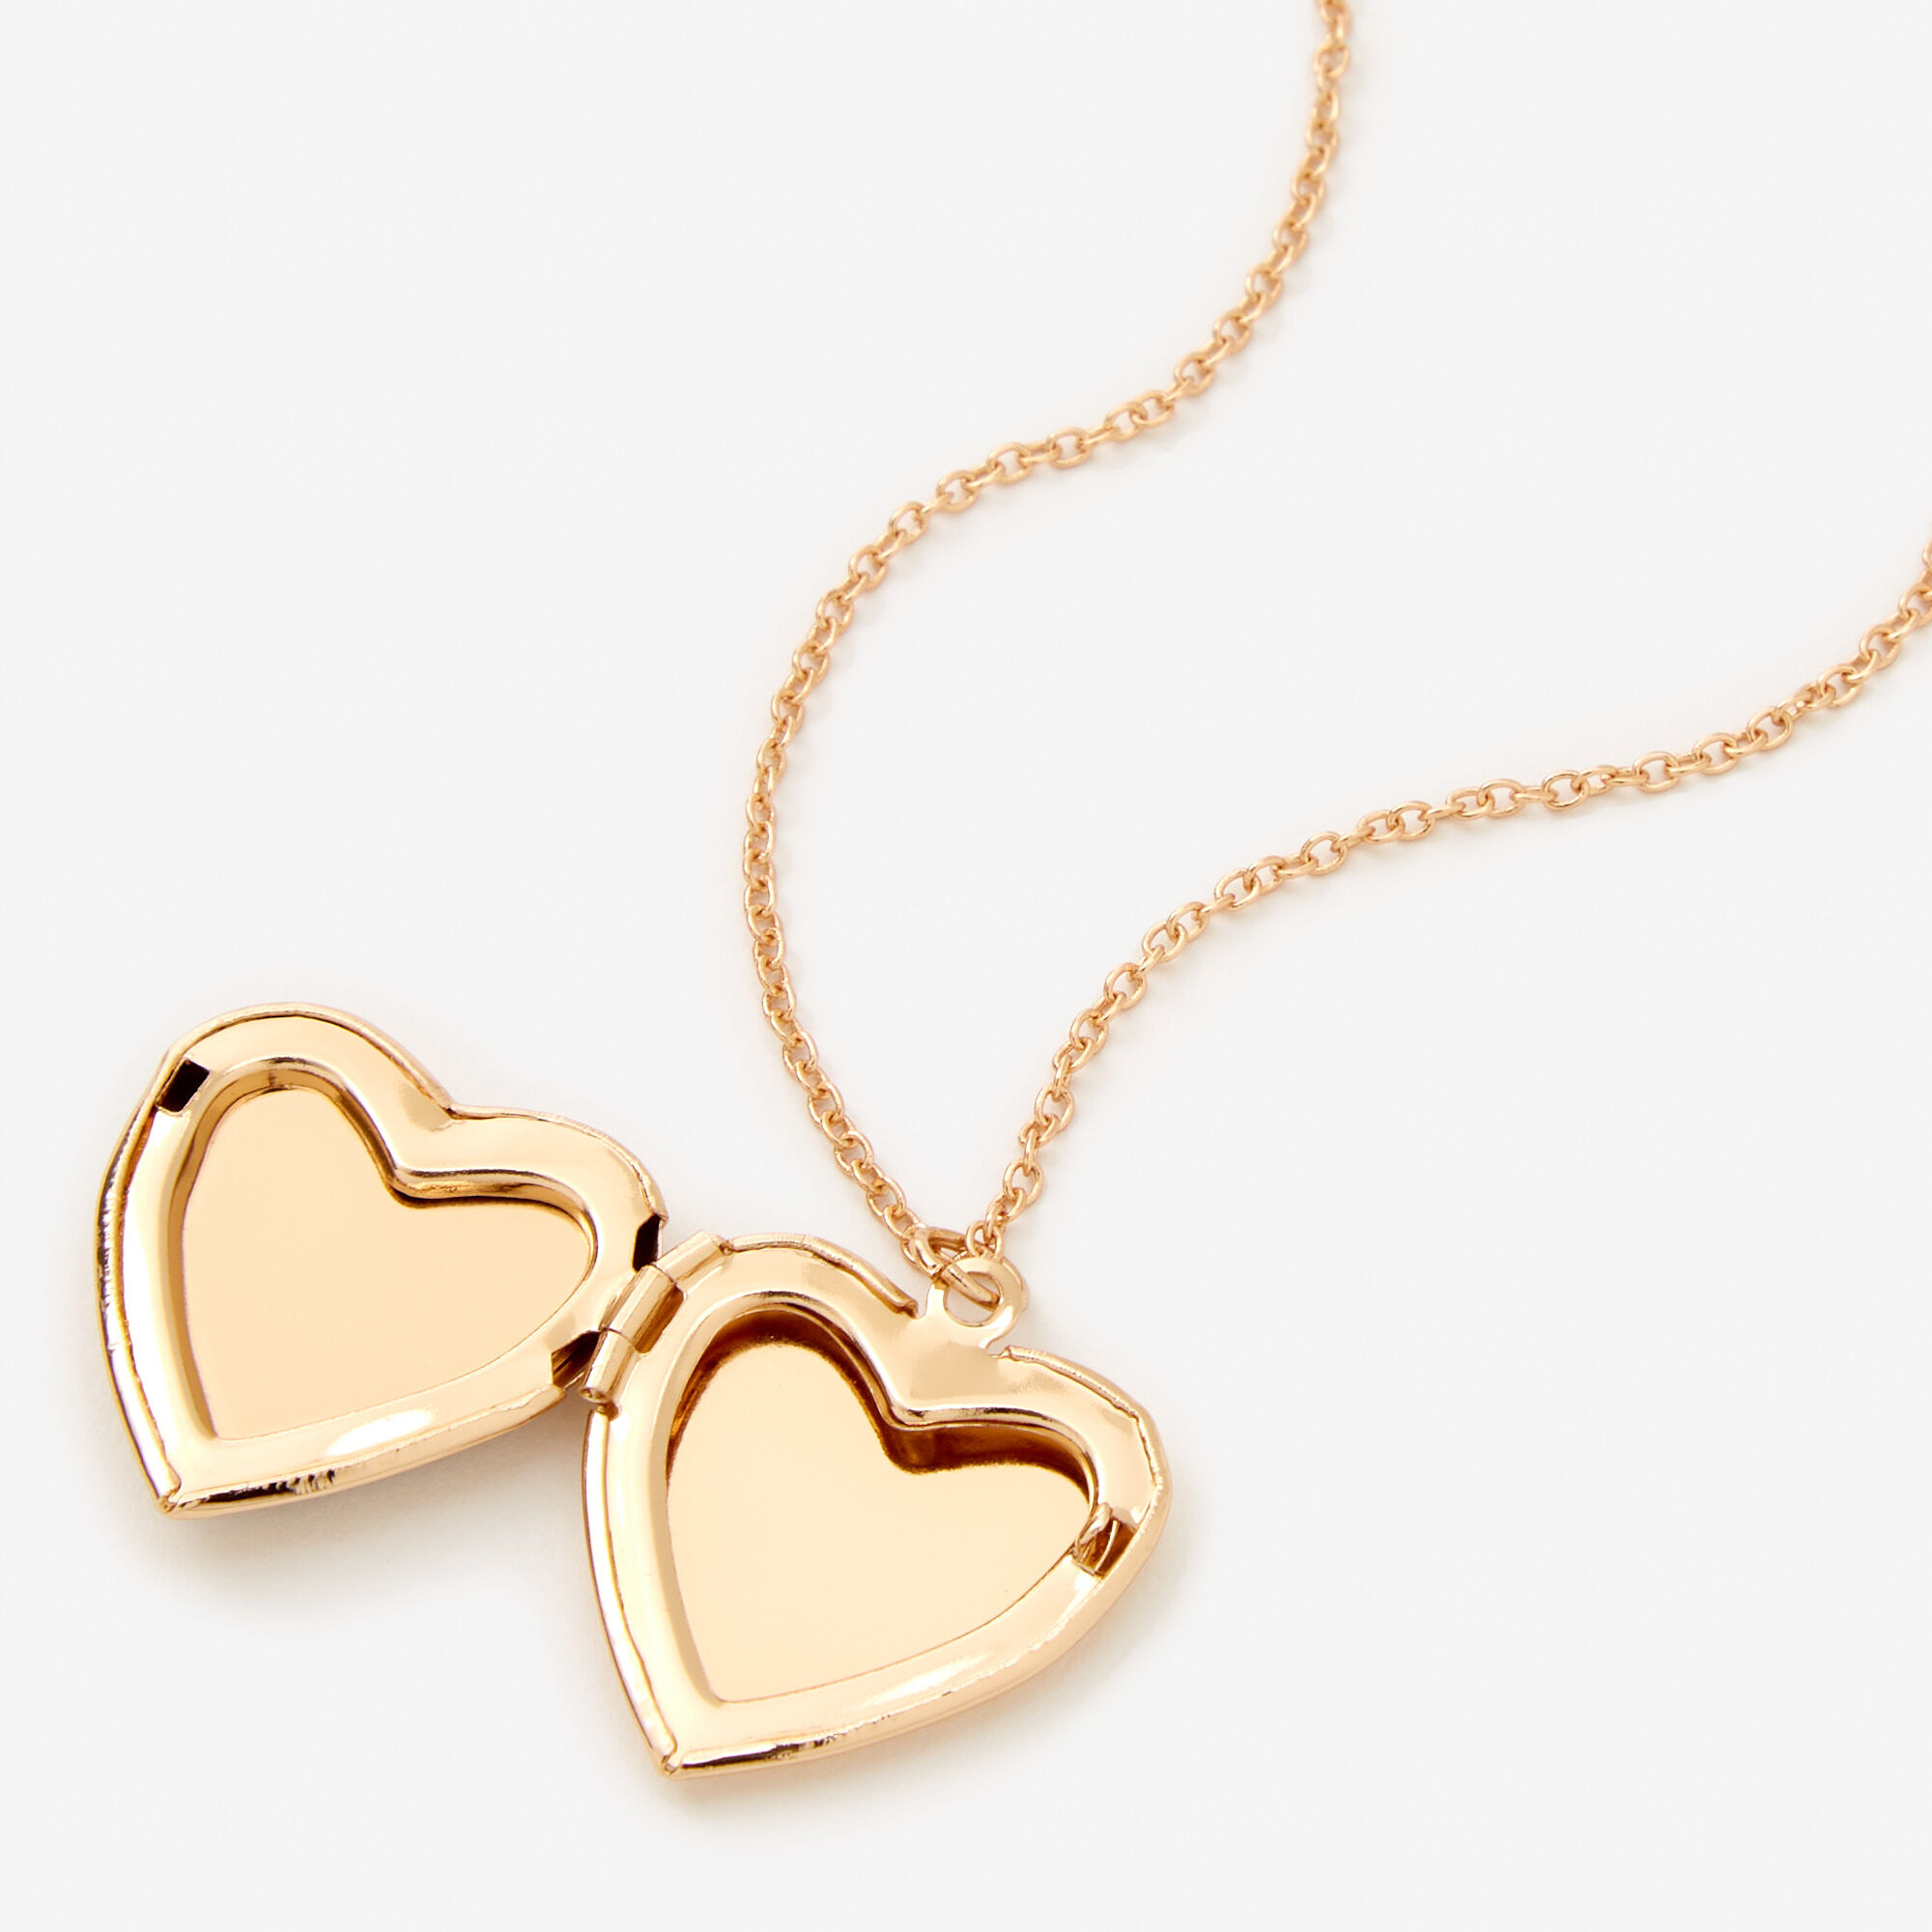 Silver Zircon Double Heart Pendant with Link Chain – GIVA Jewellery